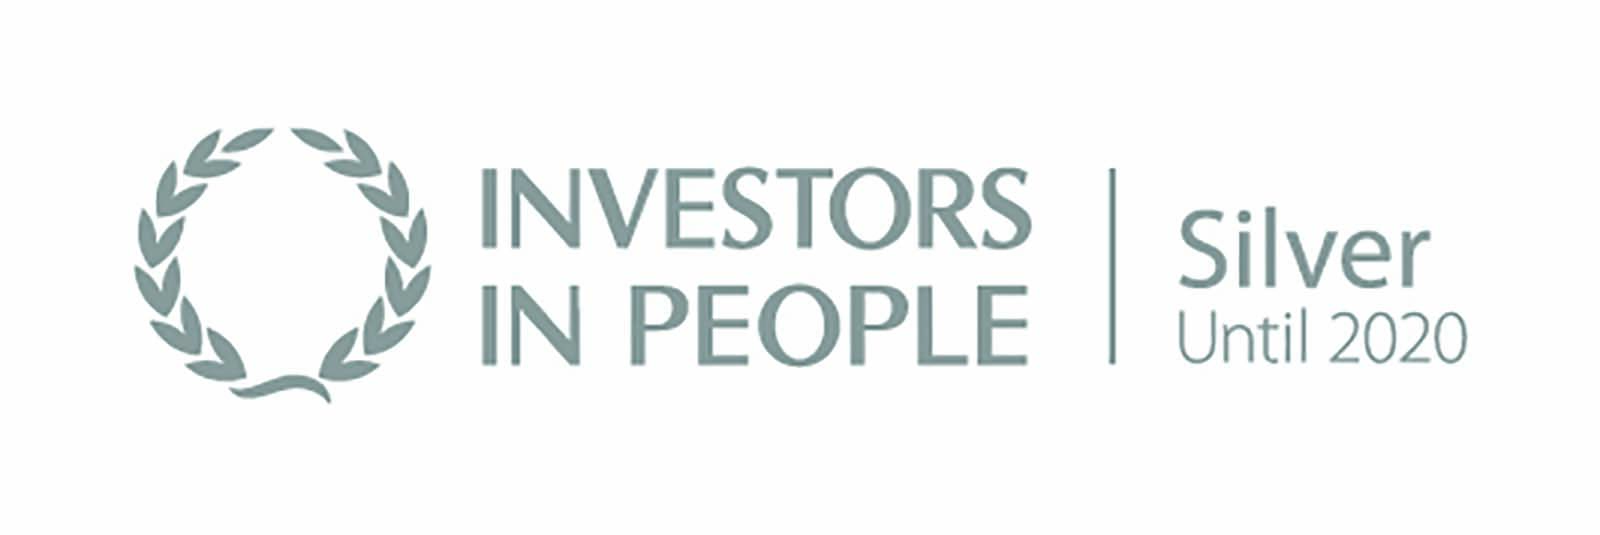 Investors in People Silver Award until 2020